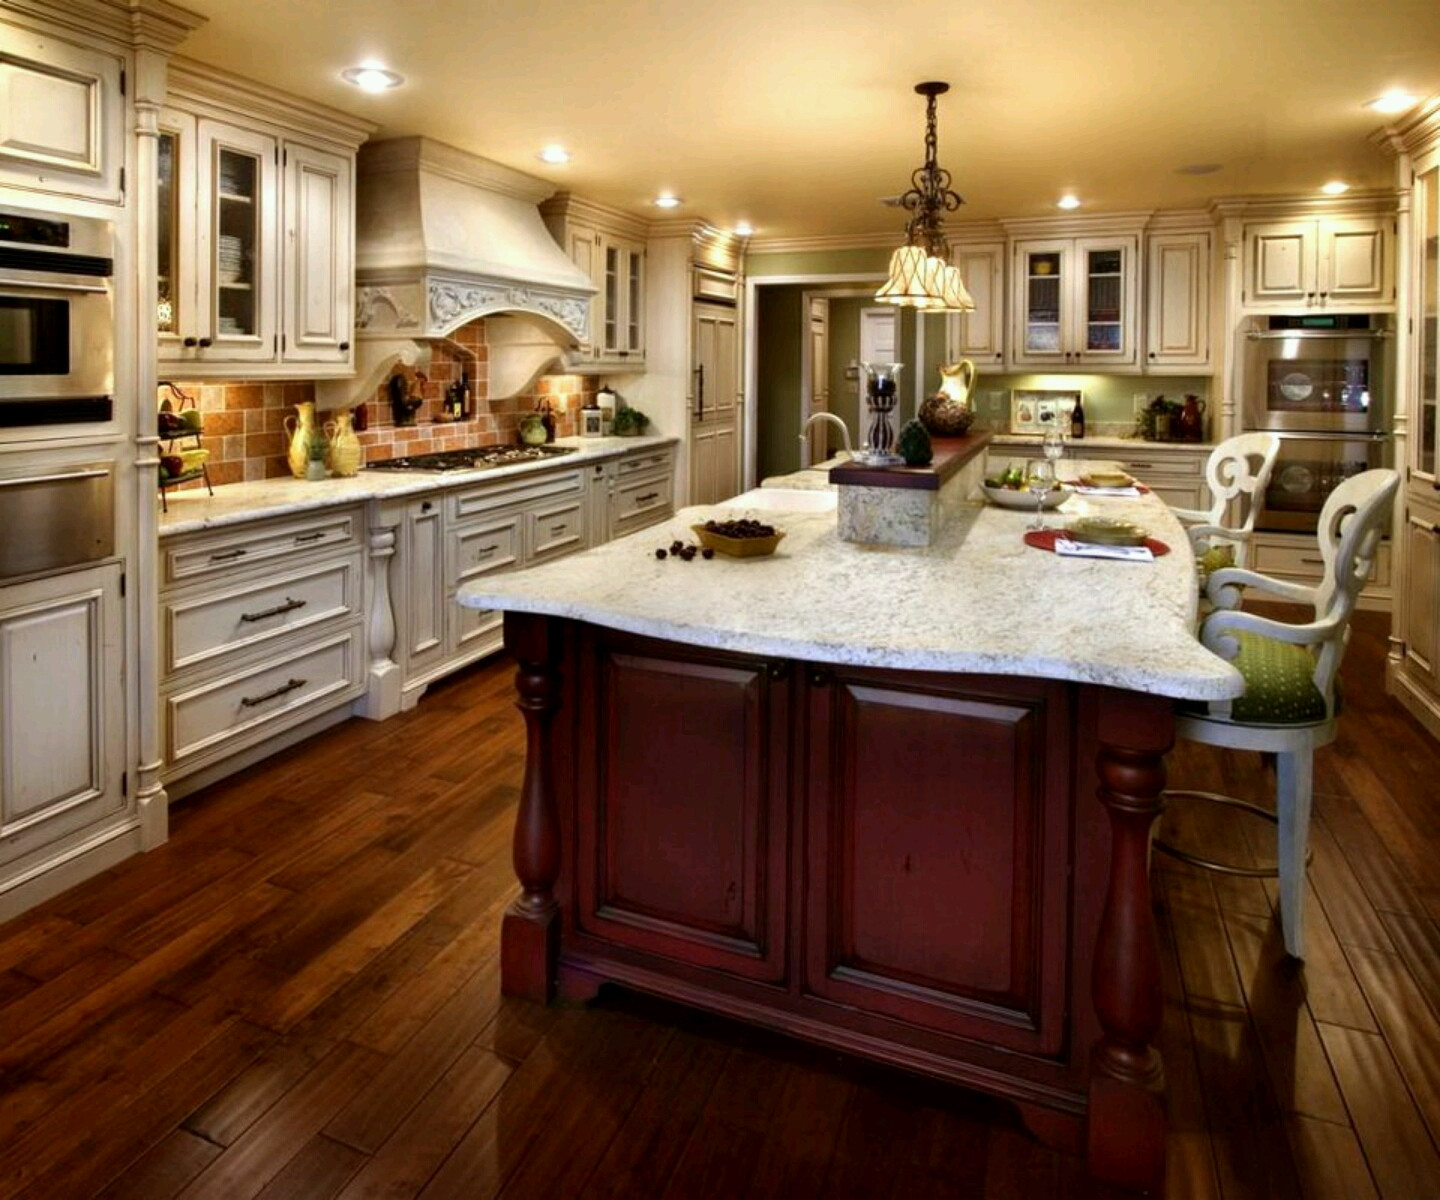 Best ideas about Luxury Kitchen Ideas
. Save or Pin Luxury kitchen modern kitchen cabinets designs Now.